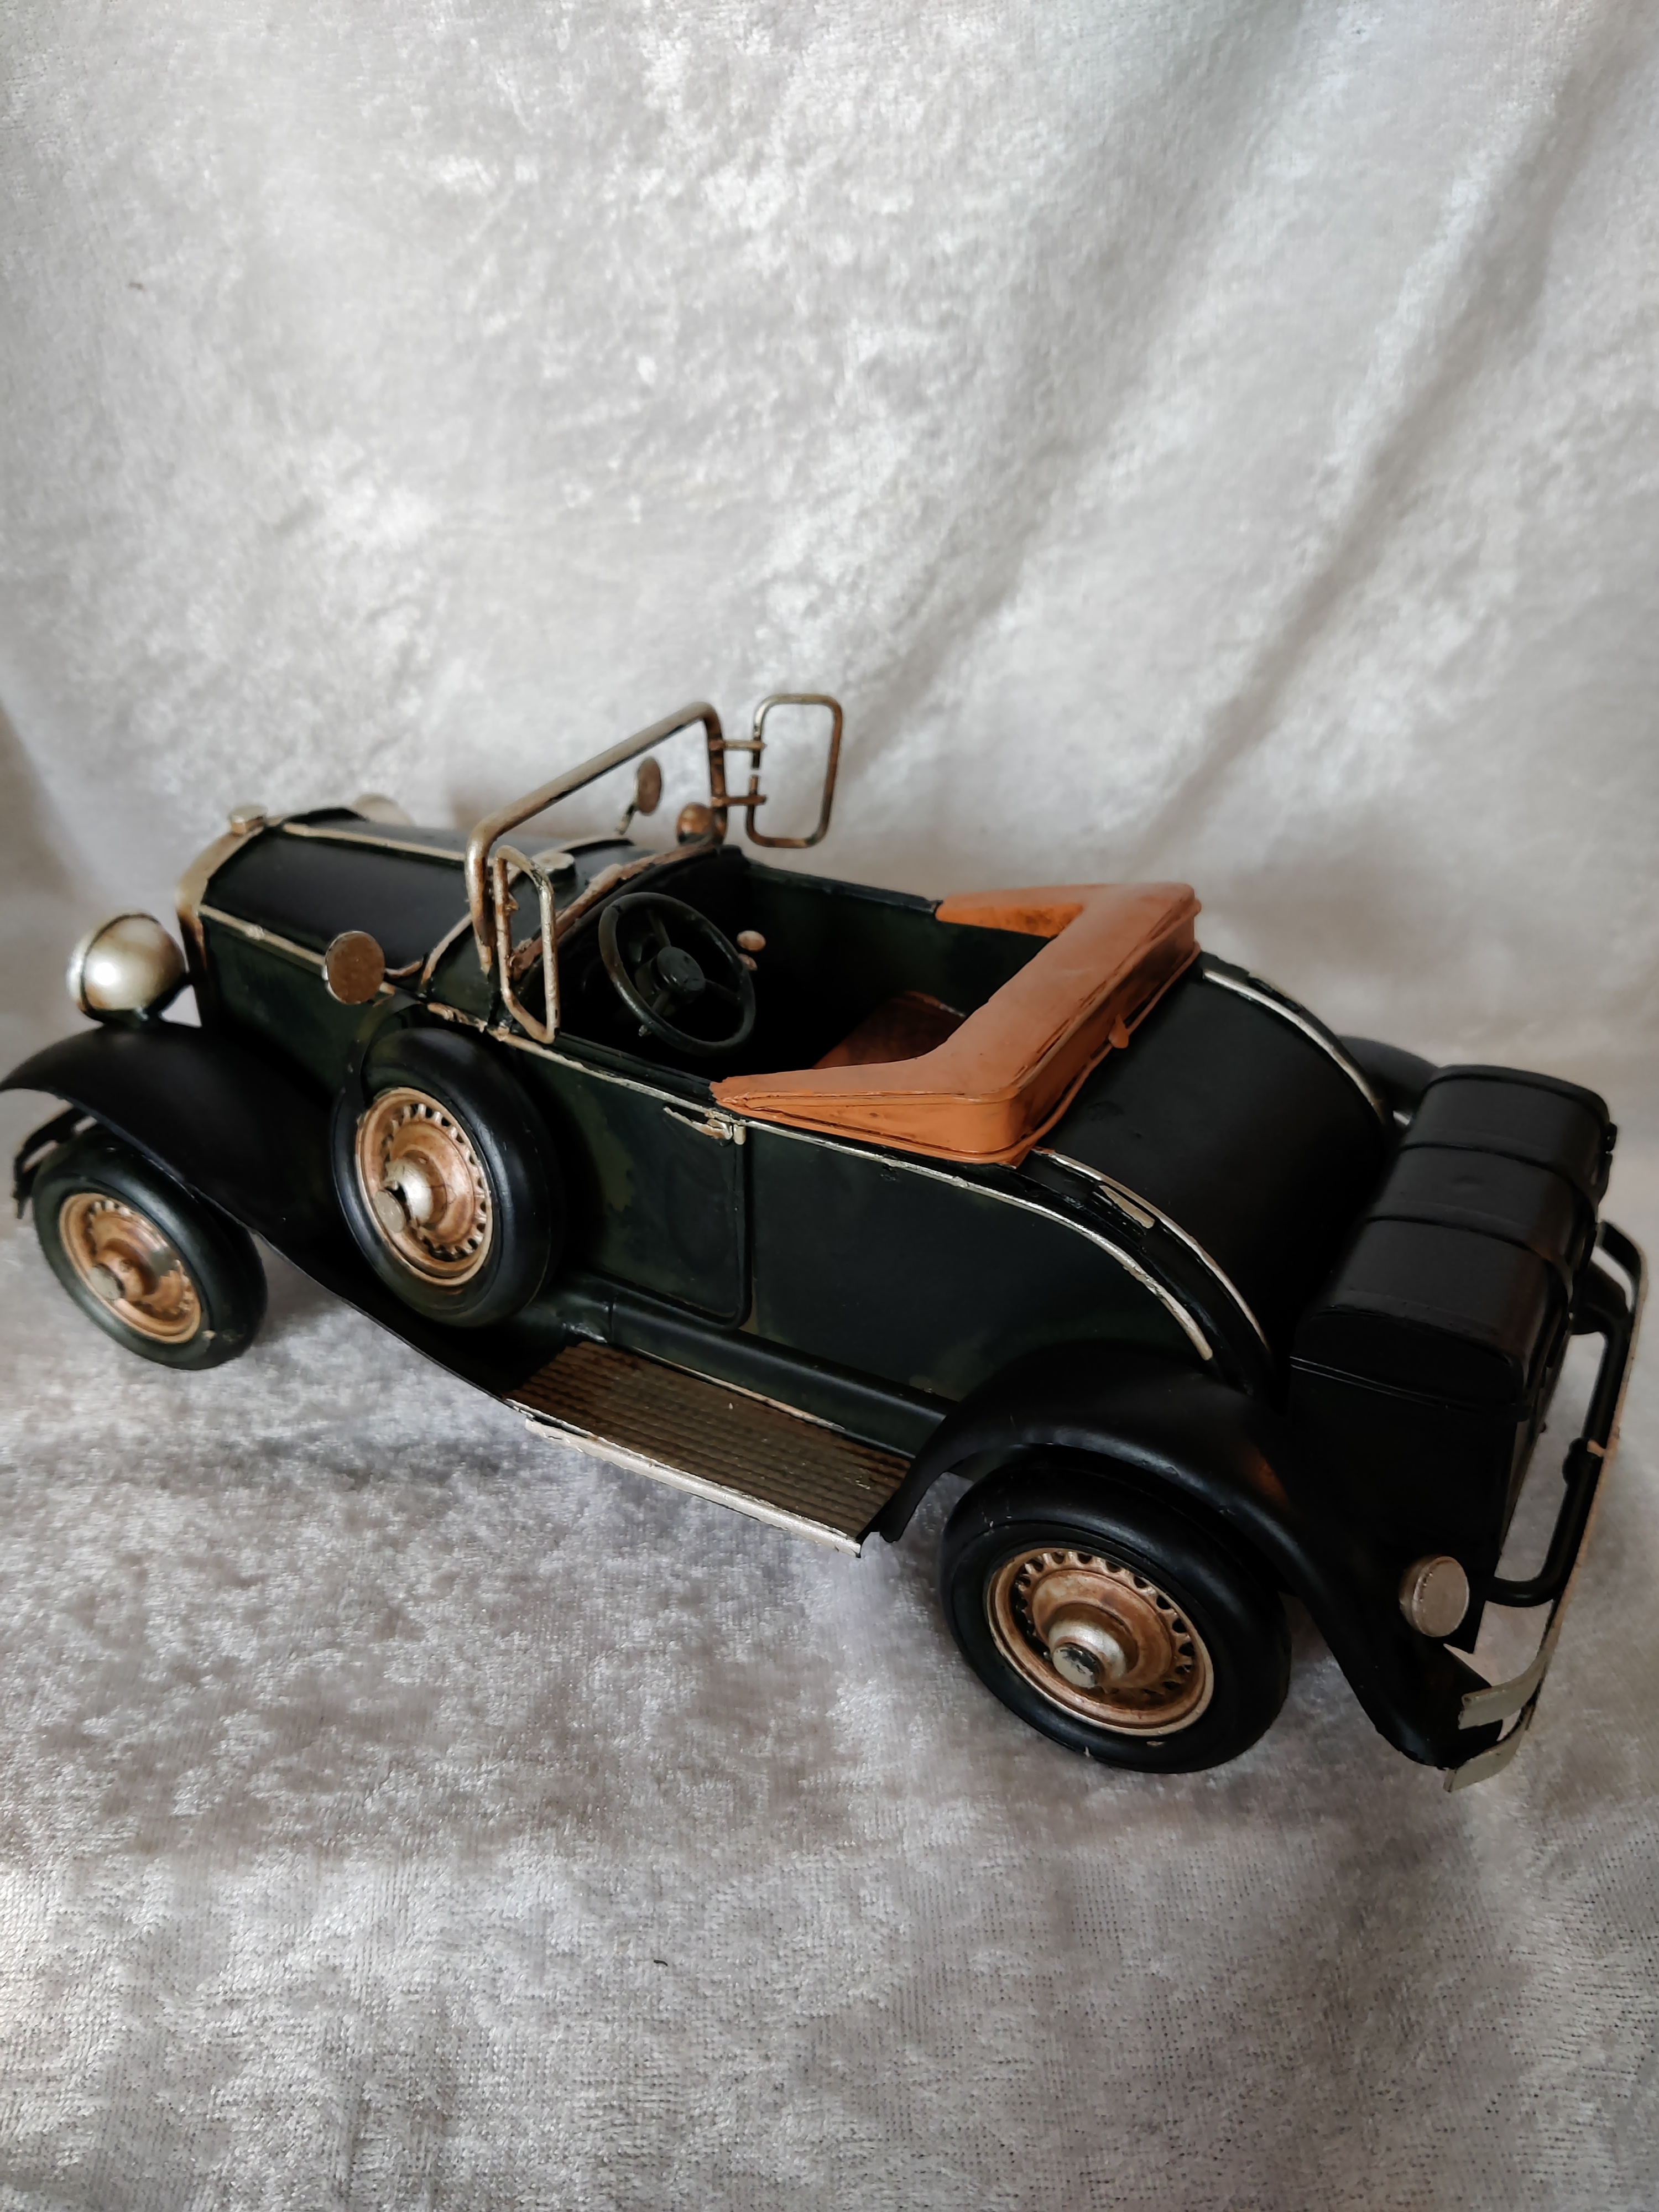 trompet Silicium de studie Blikken miniatuur zwarte auto oldtimer oranje binnenkap